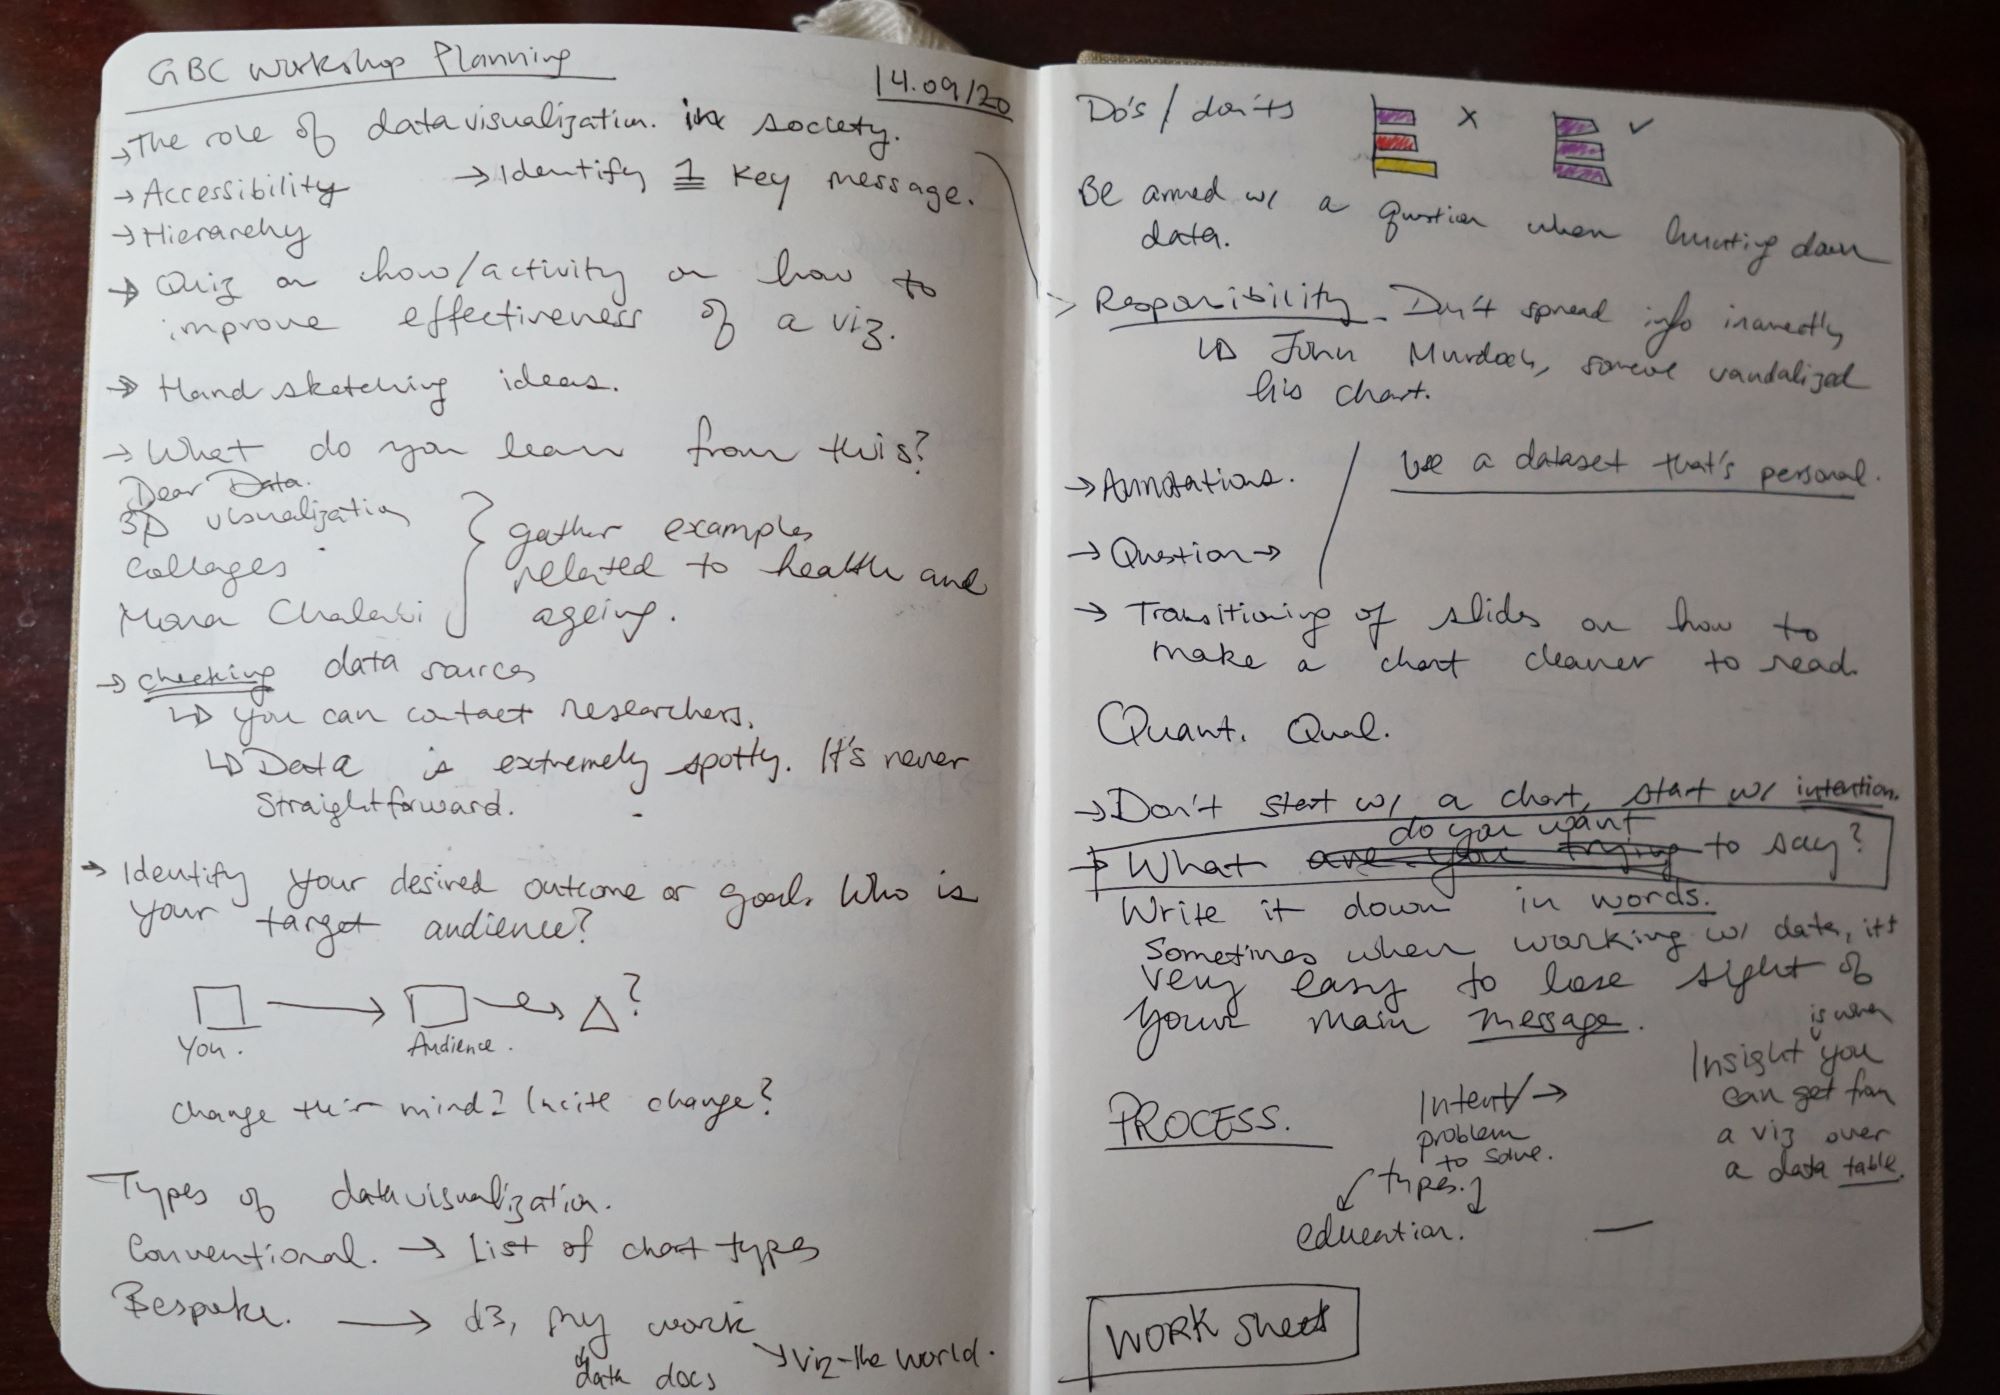 My notebook where I brainstormed ideas